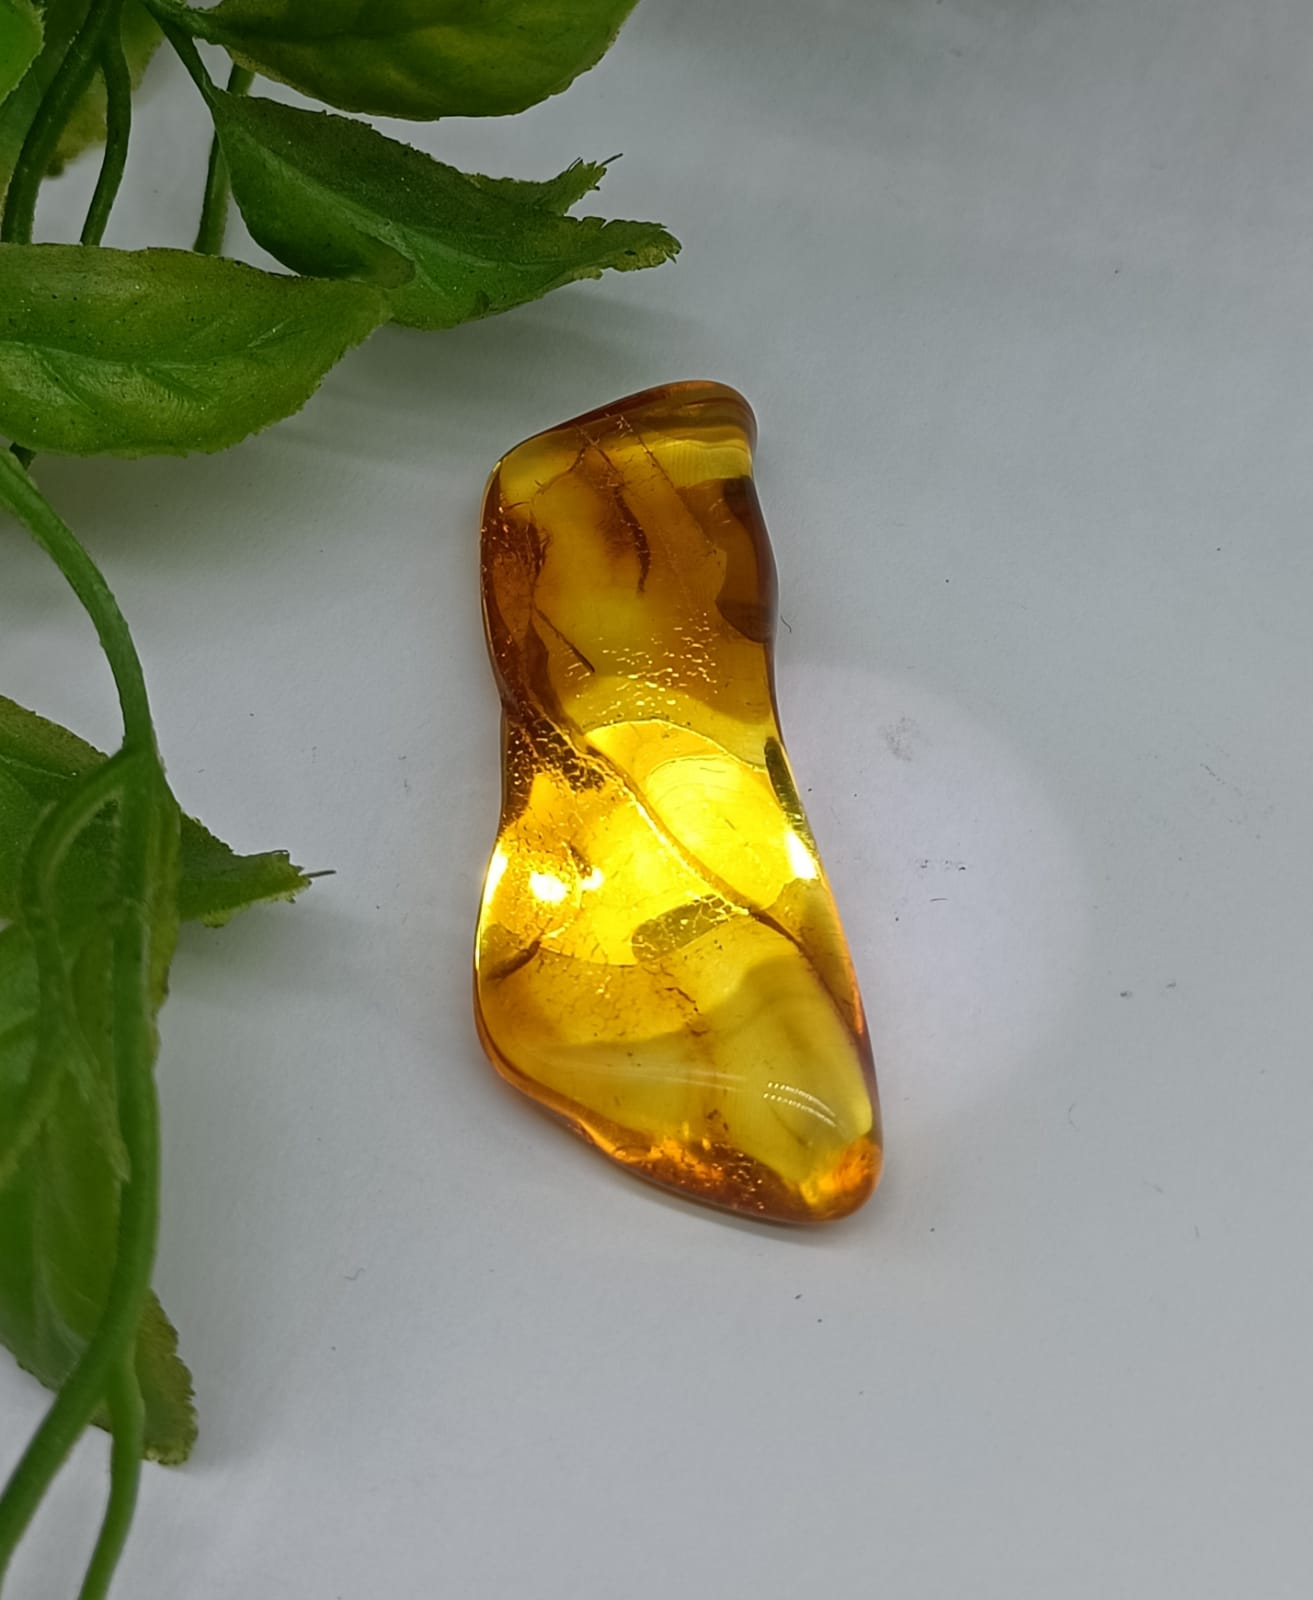 Baltic Amber Polished

